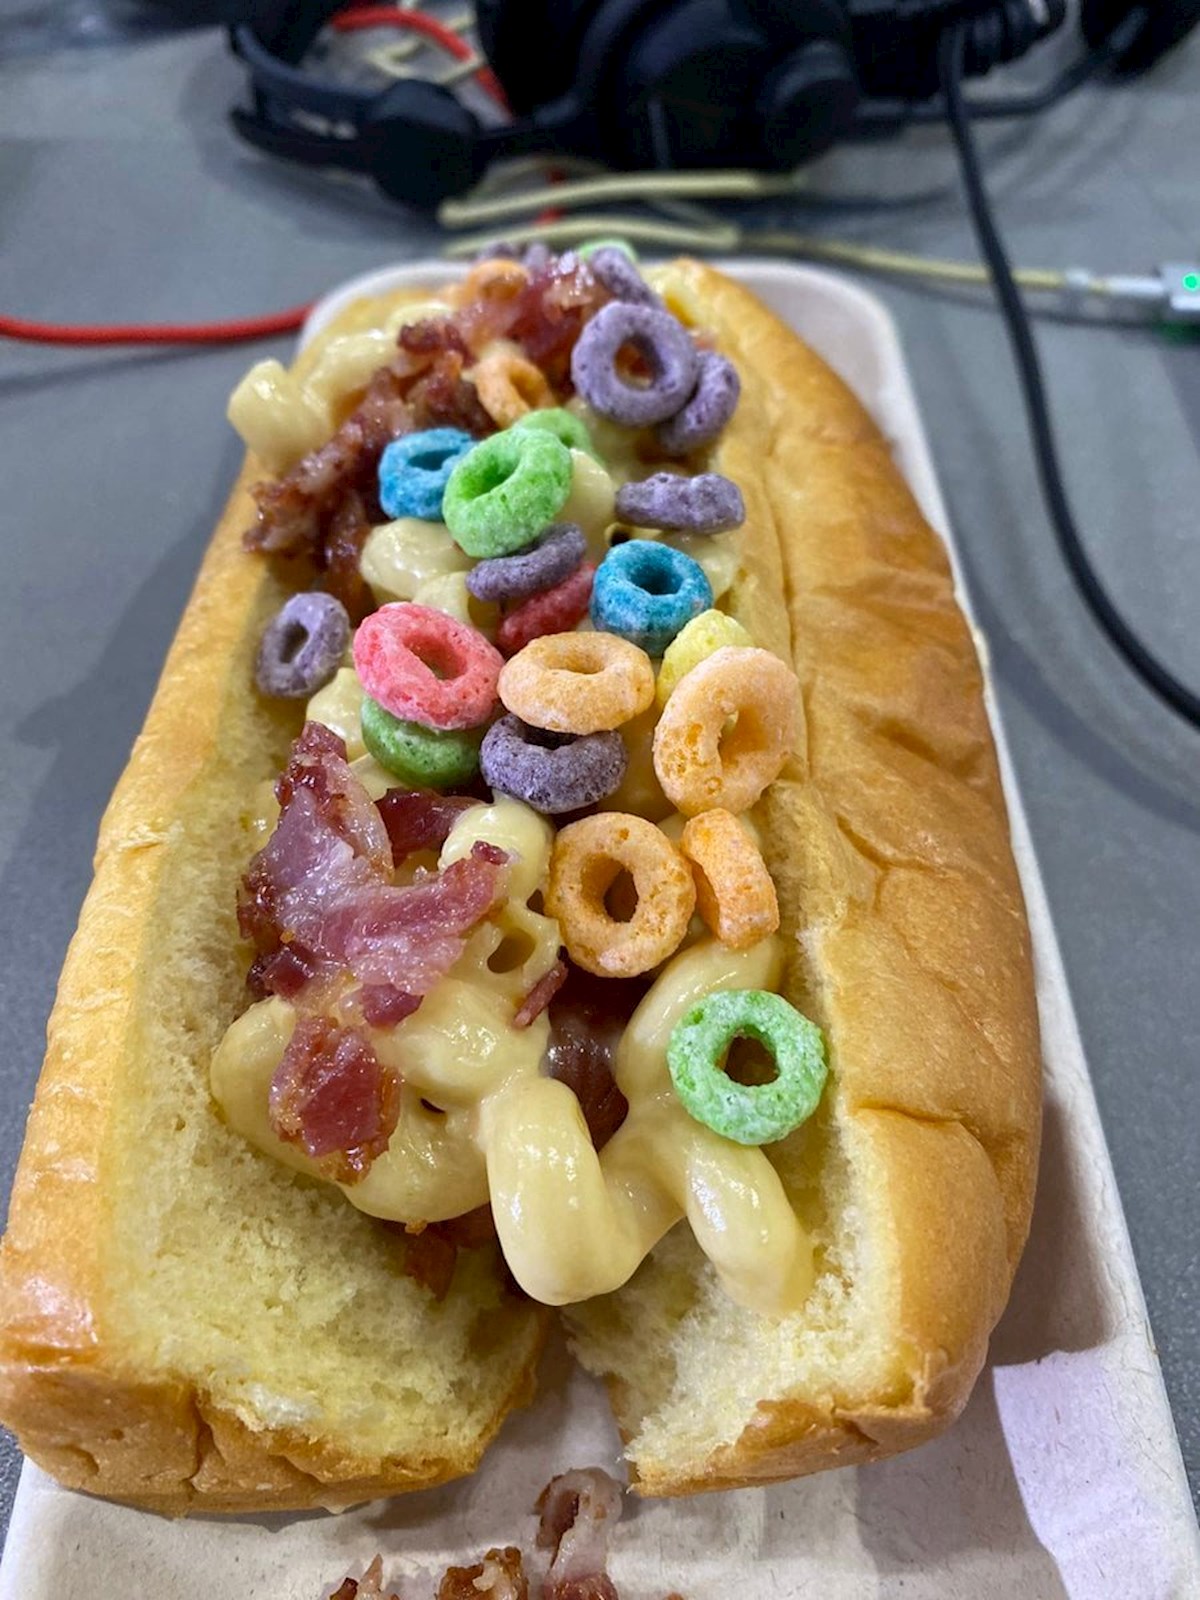 Mac 'n cheese/hot dog/fruit loops